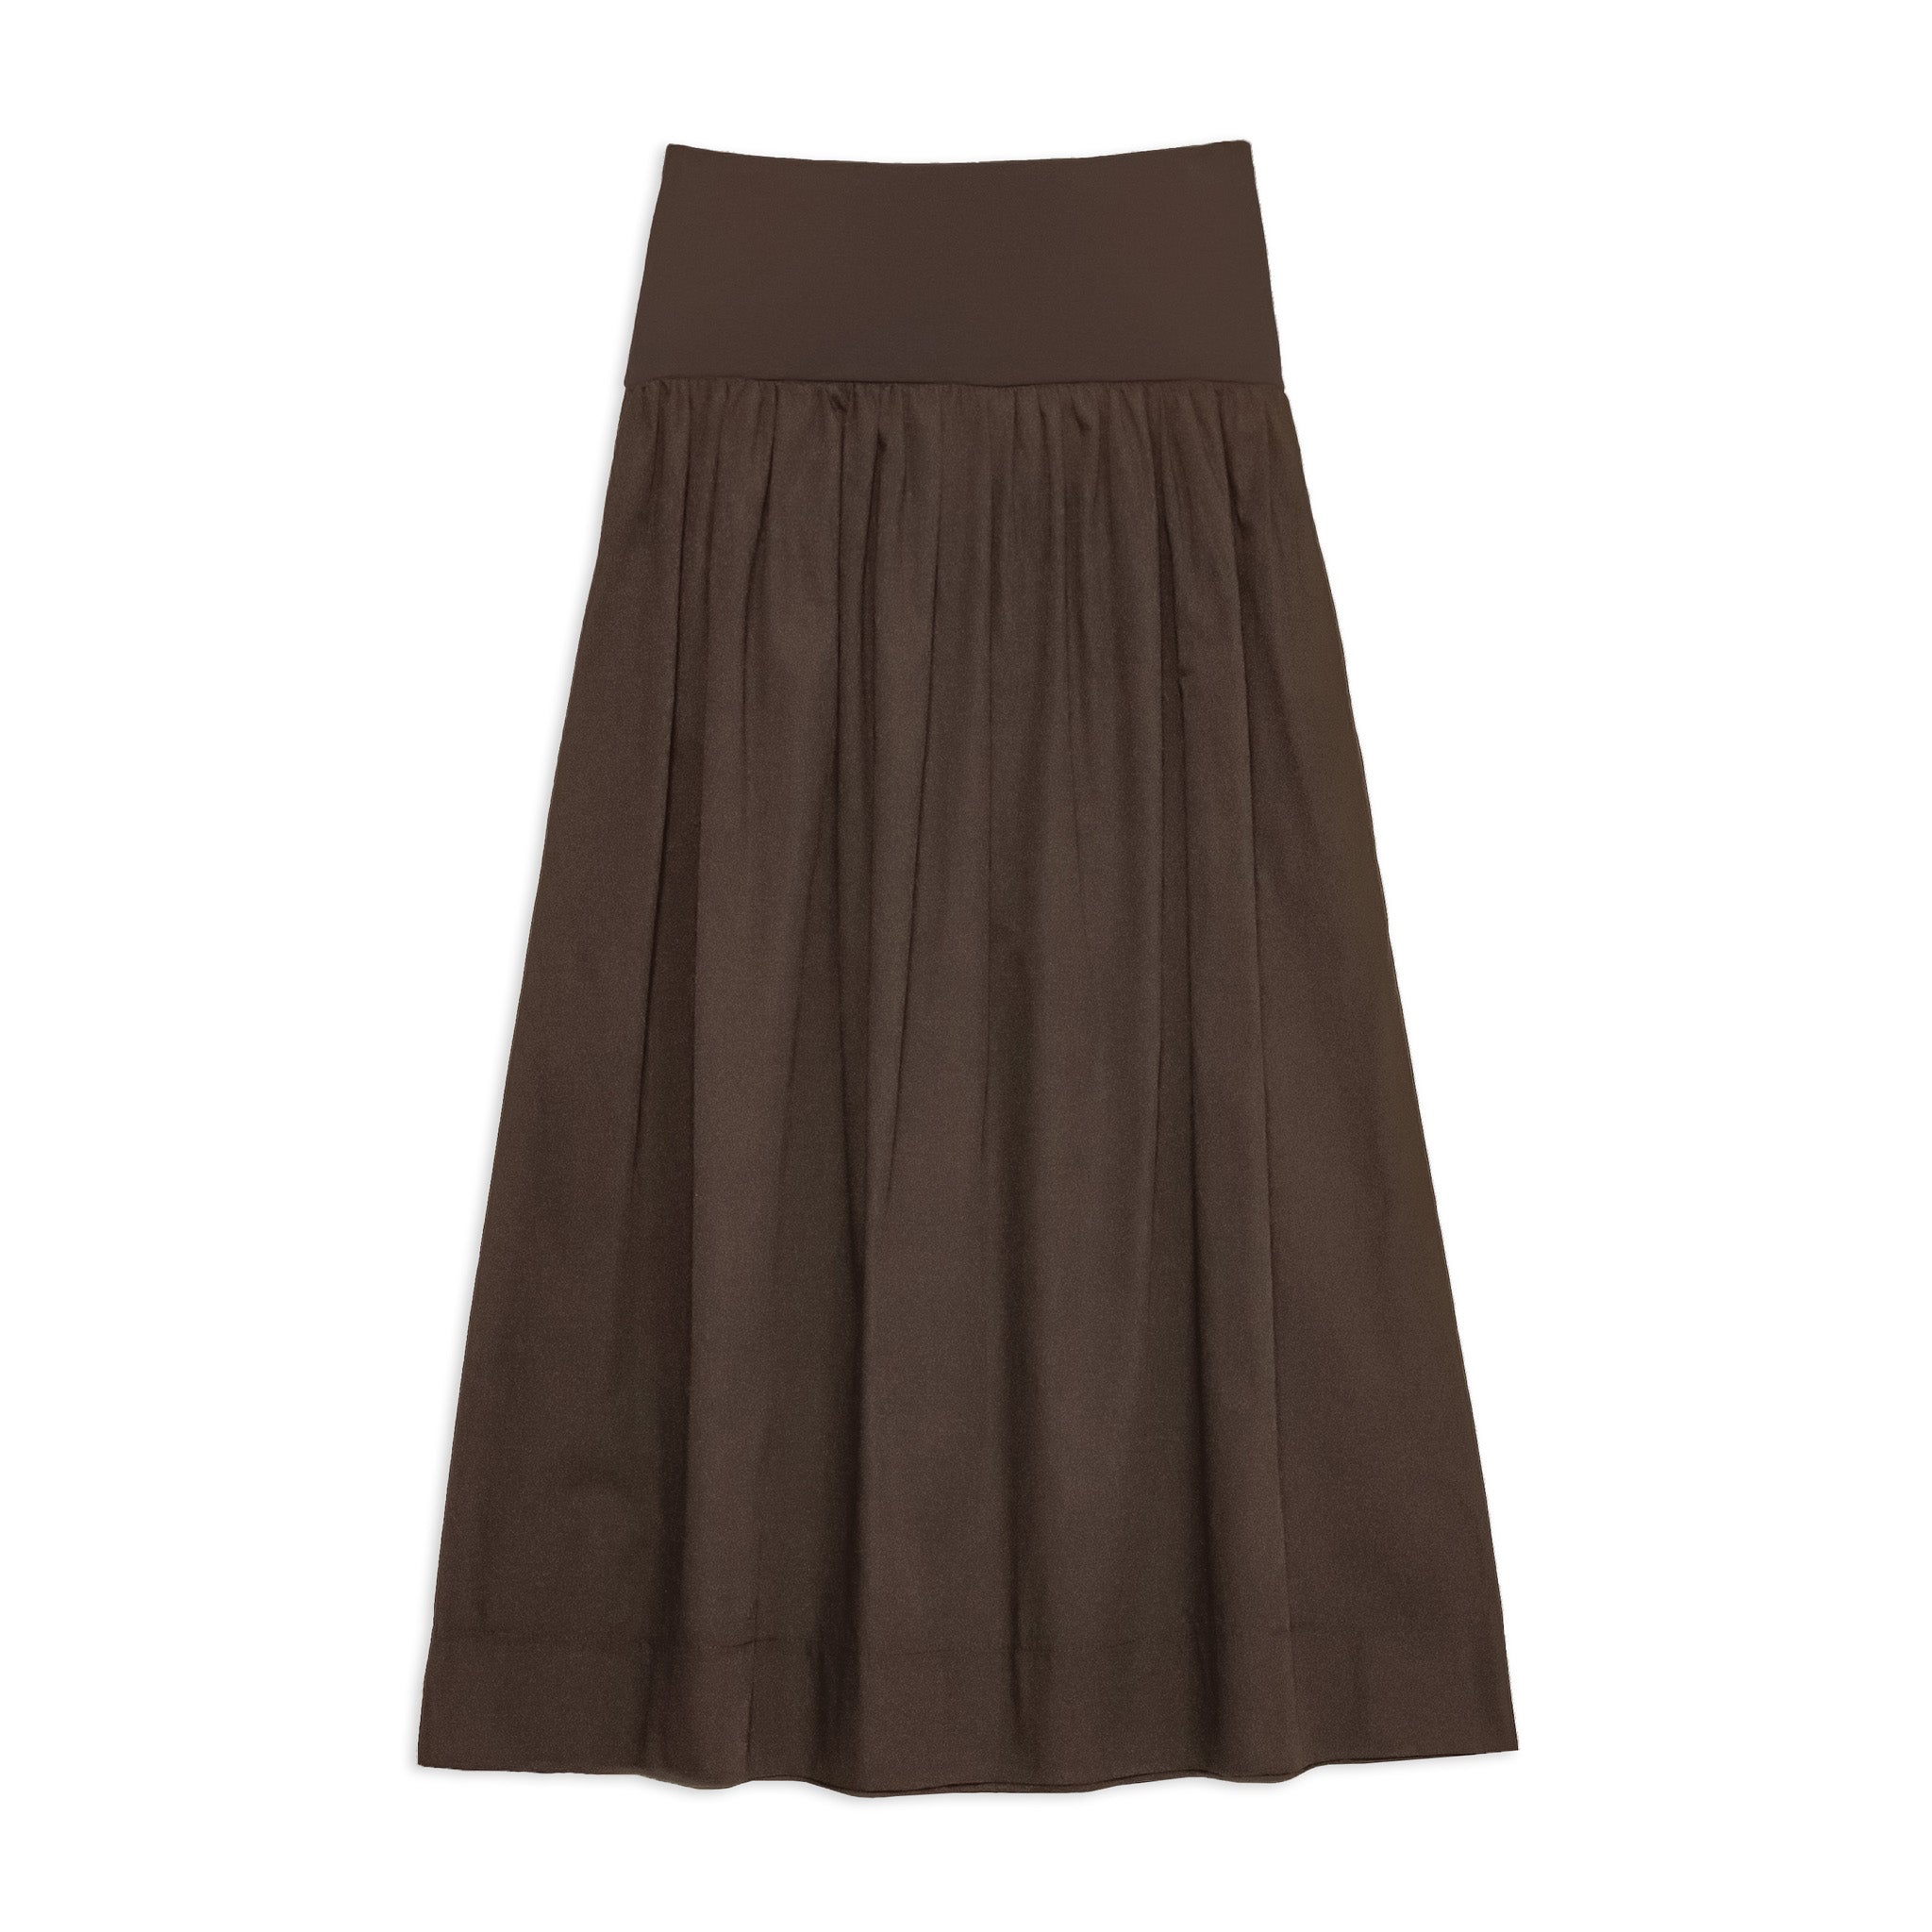 Chocolate Woven Mix Full Skirt